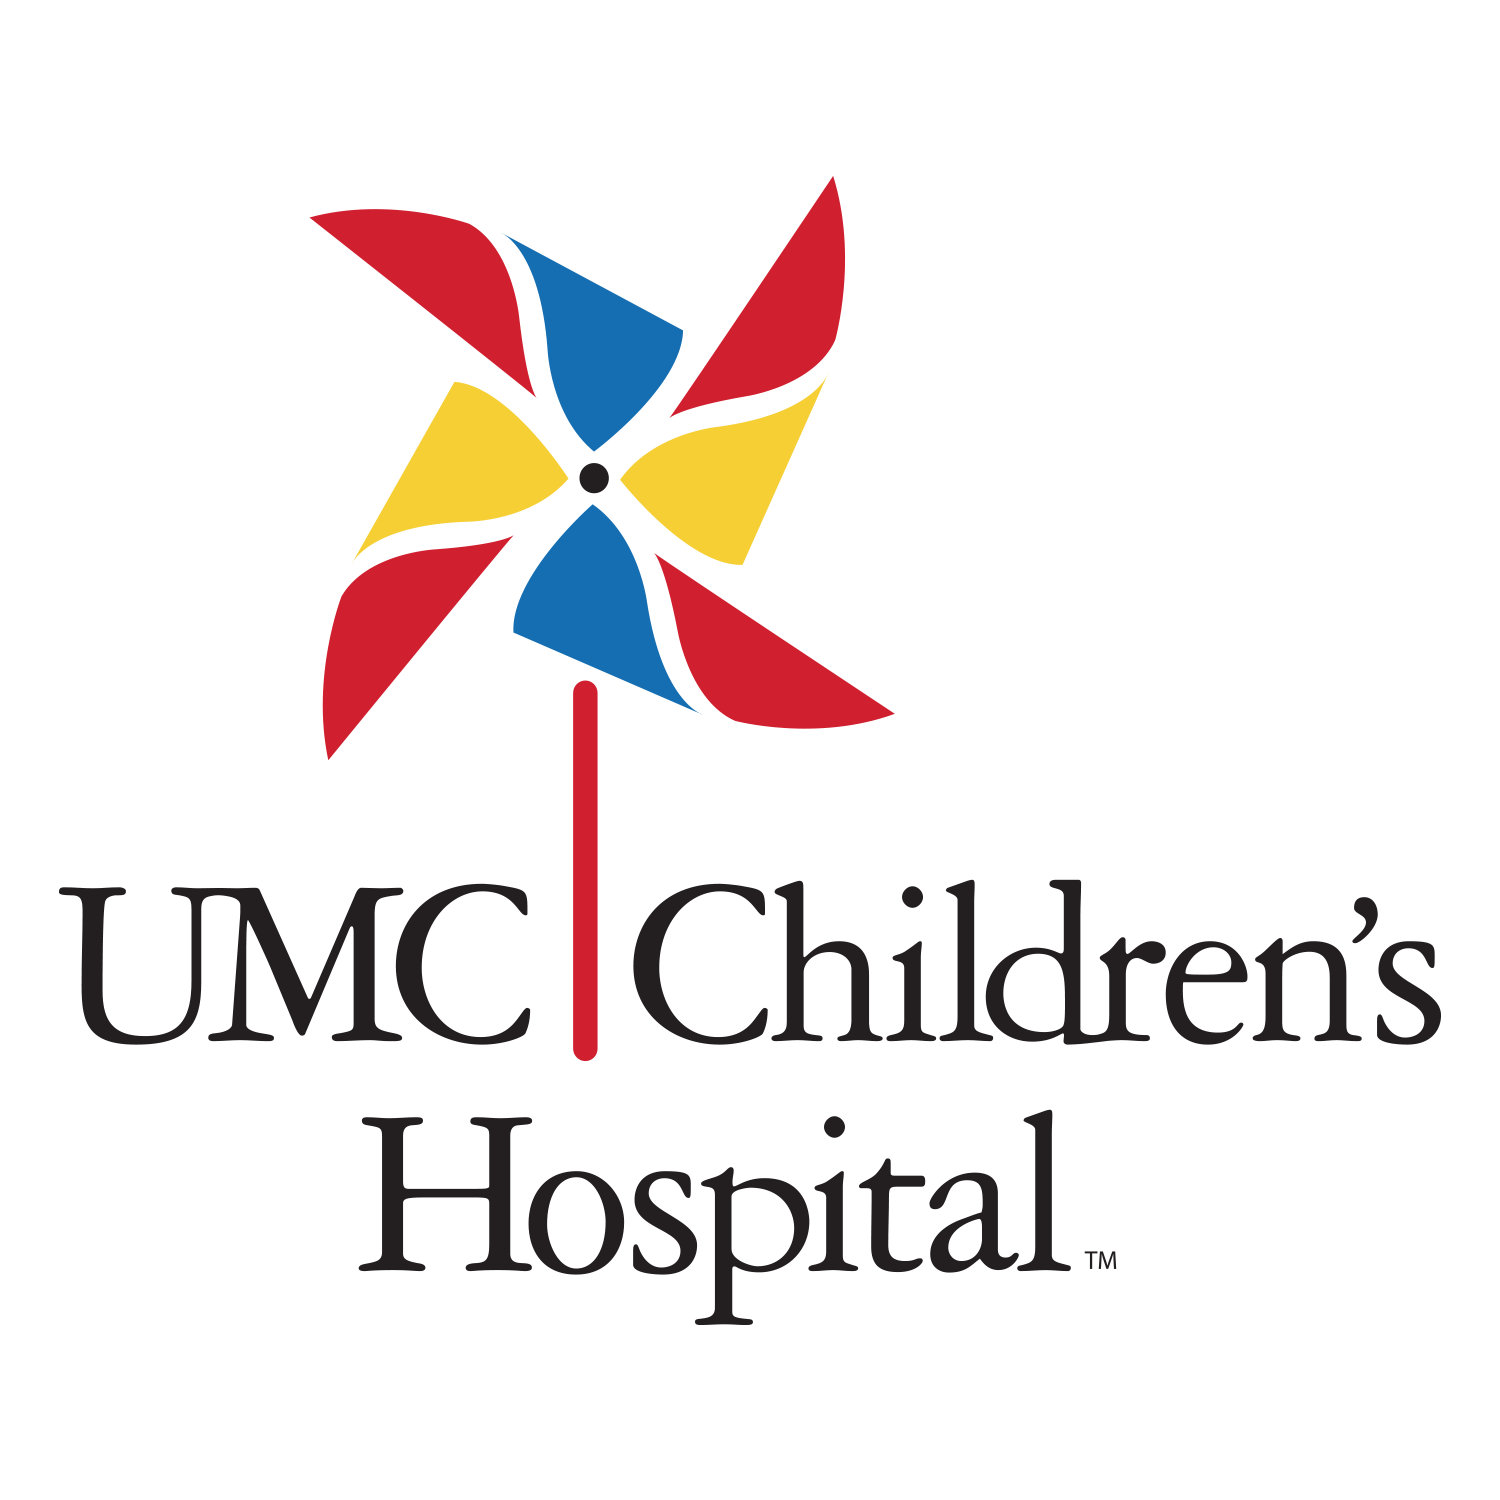 UMC Children's Hospital logo